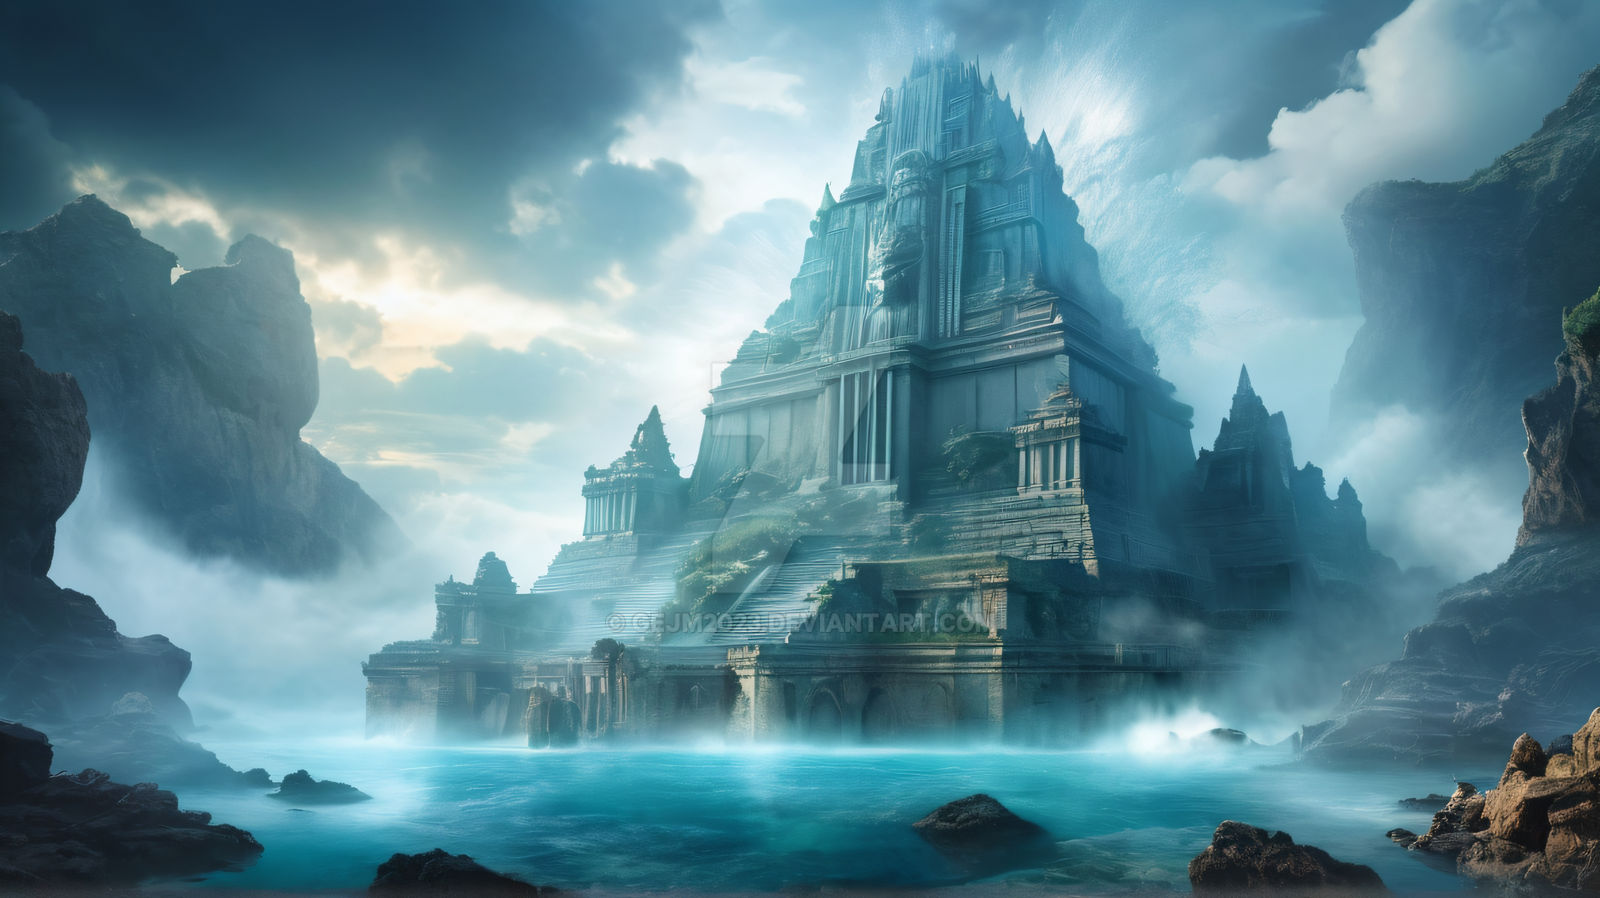 Lost Atlantis. by Gejm2023 on DeviantArt